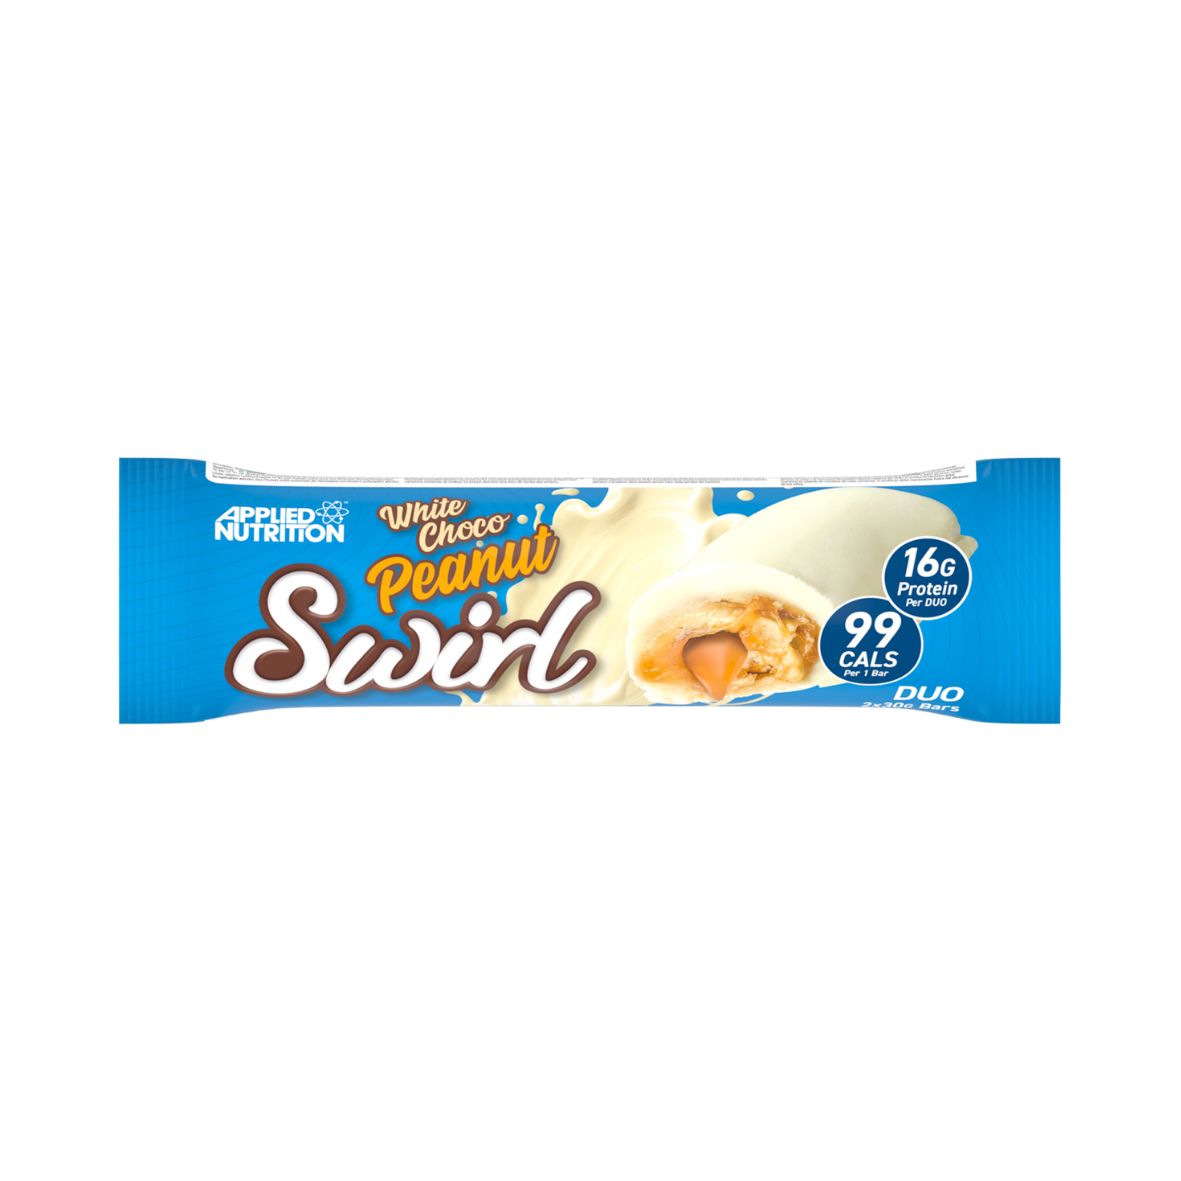 applied-nutrition-swirl-white-choco-peanut